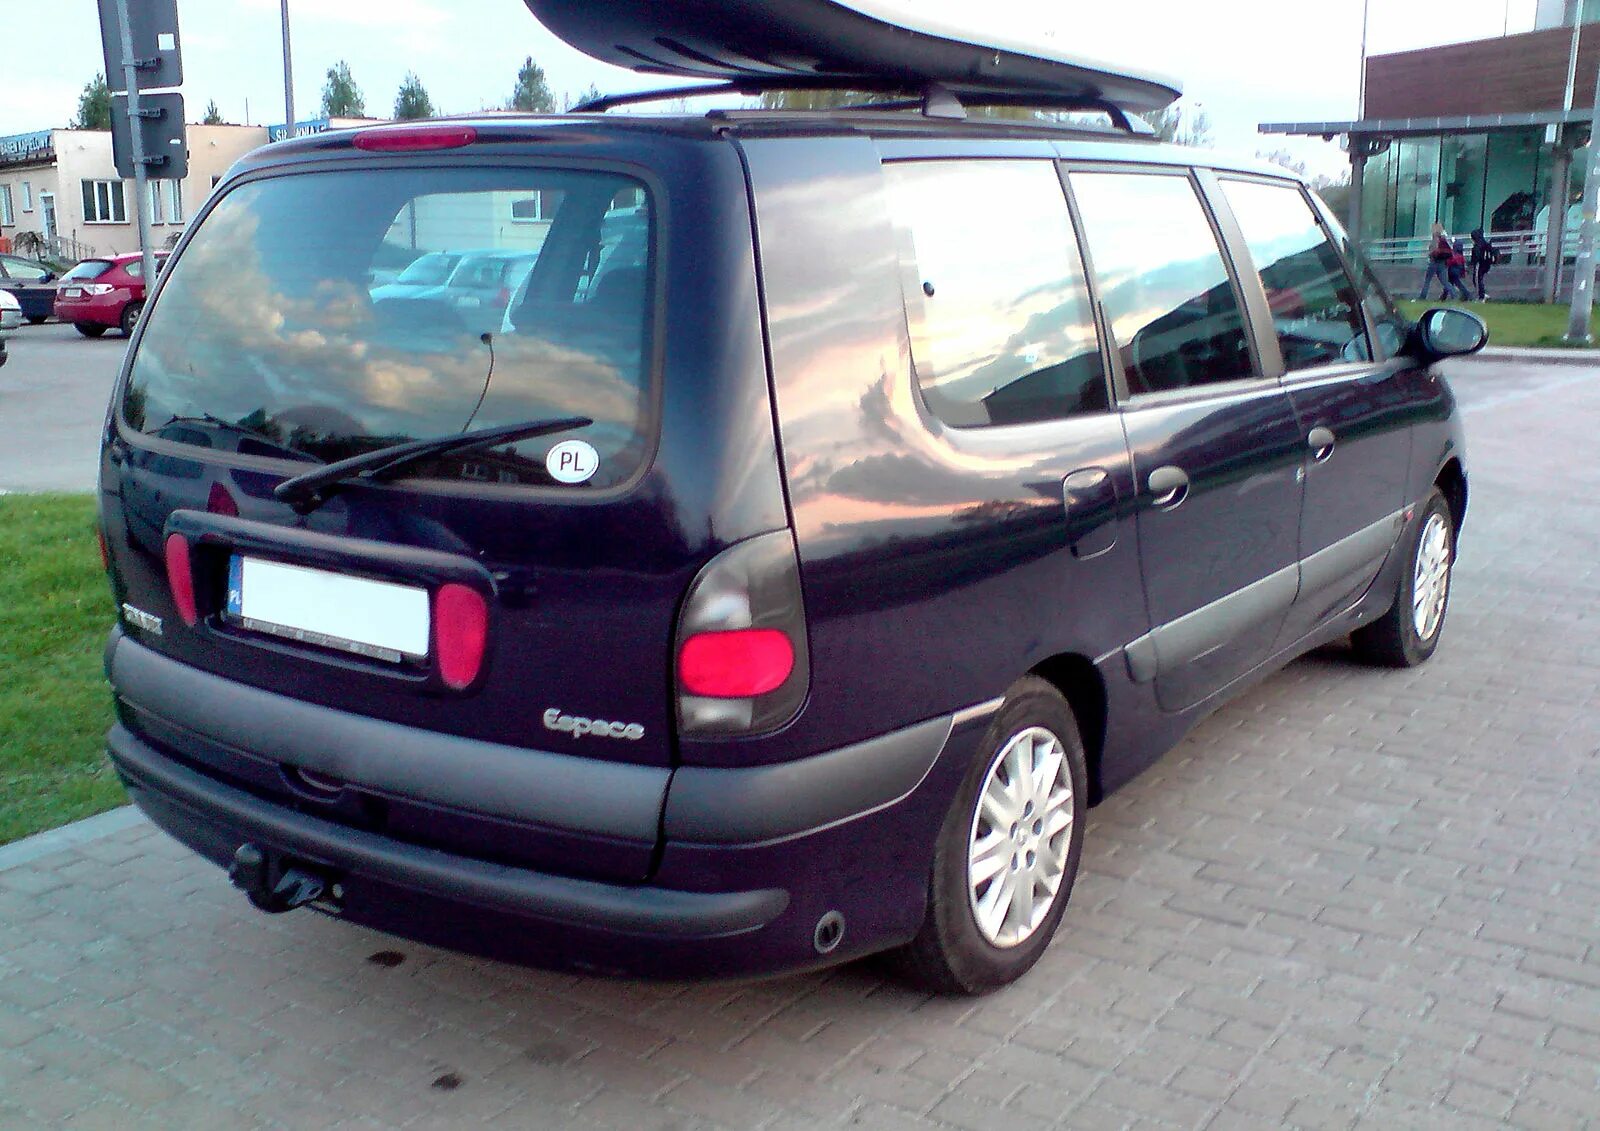 Renault espace 3. Рено Эспейс 3. Рено Гранд Эспейс 3. Renault Espace 3 2000. Renault Espace v6 1997.